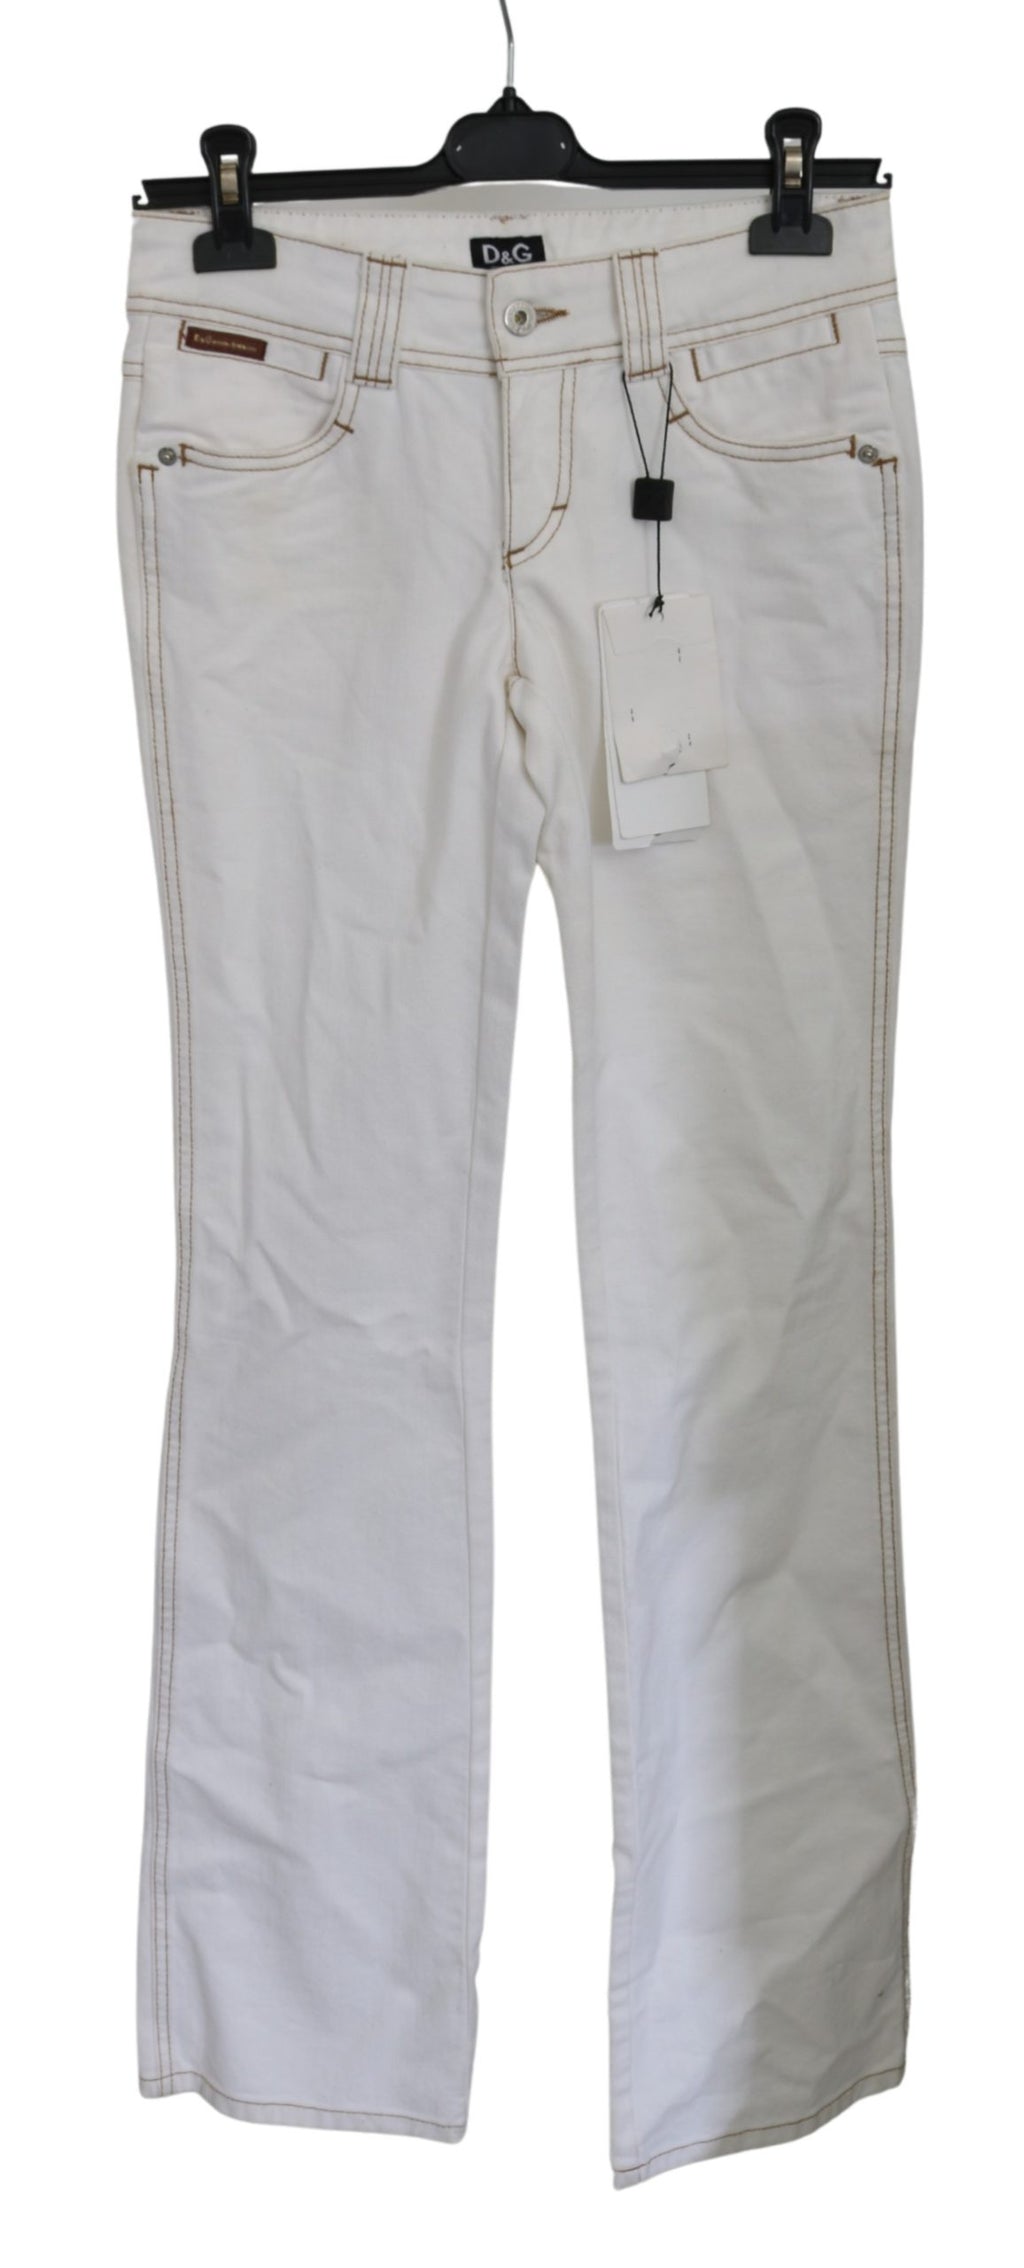 White Low Waist Boot Cut Cotton Jeans